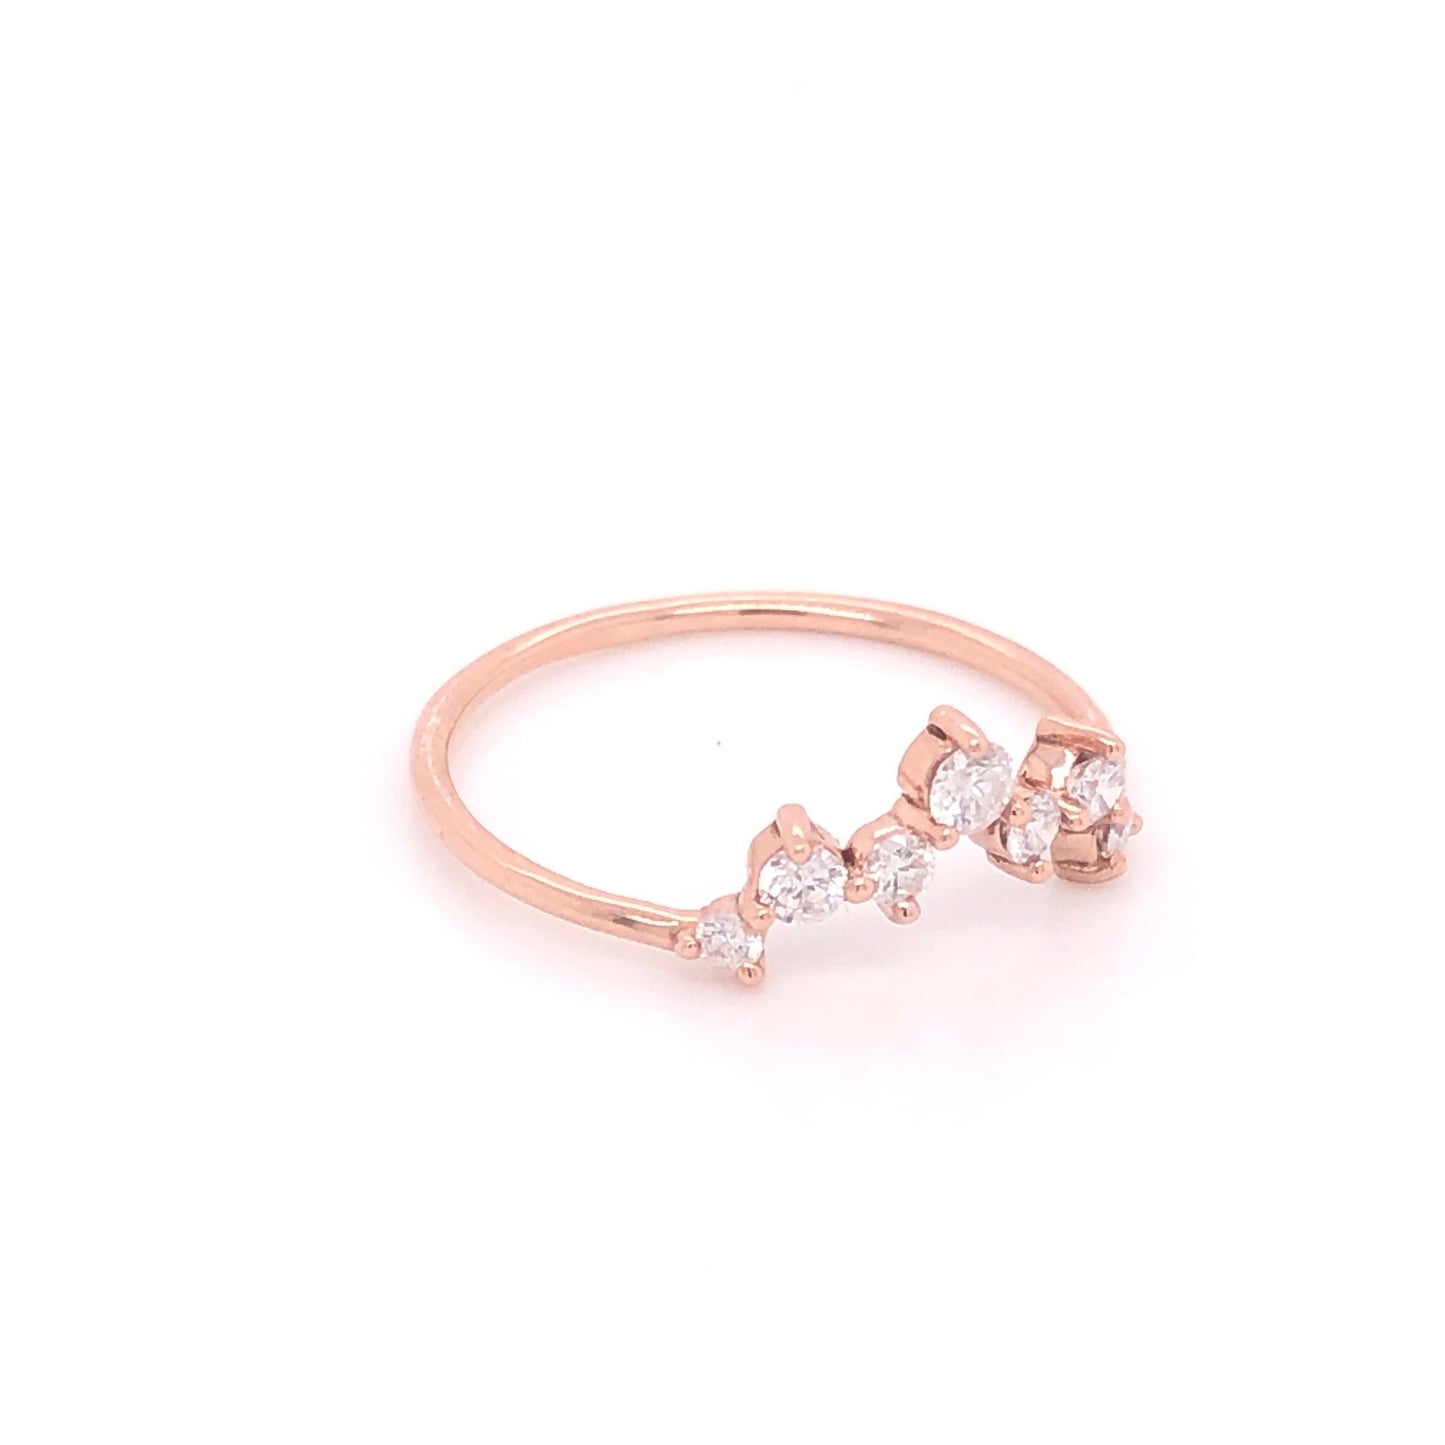 IMMEDIATE DELIVERY / Carlota Diamond Ring / 14k Rose Gold / Size 4.5